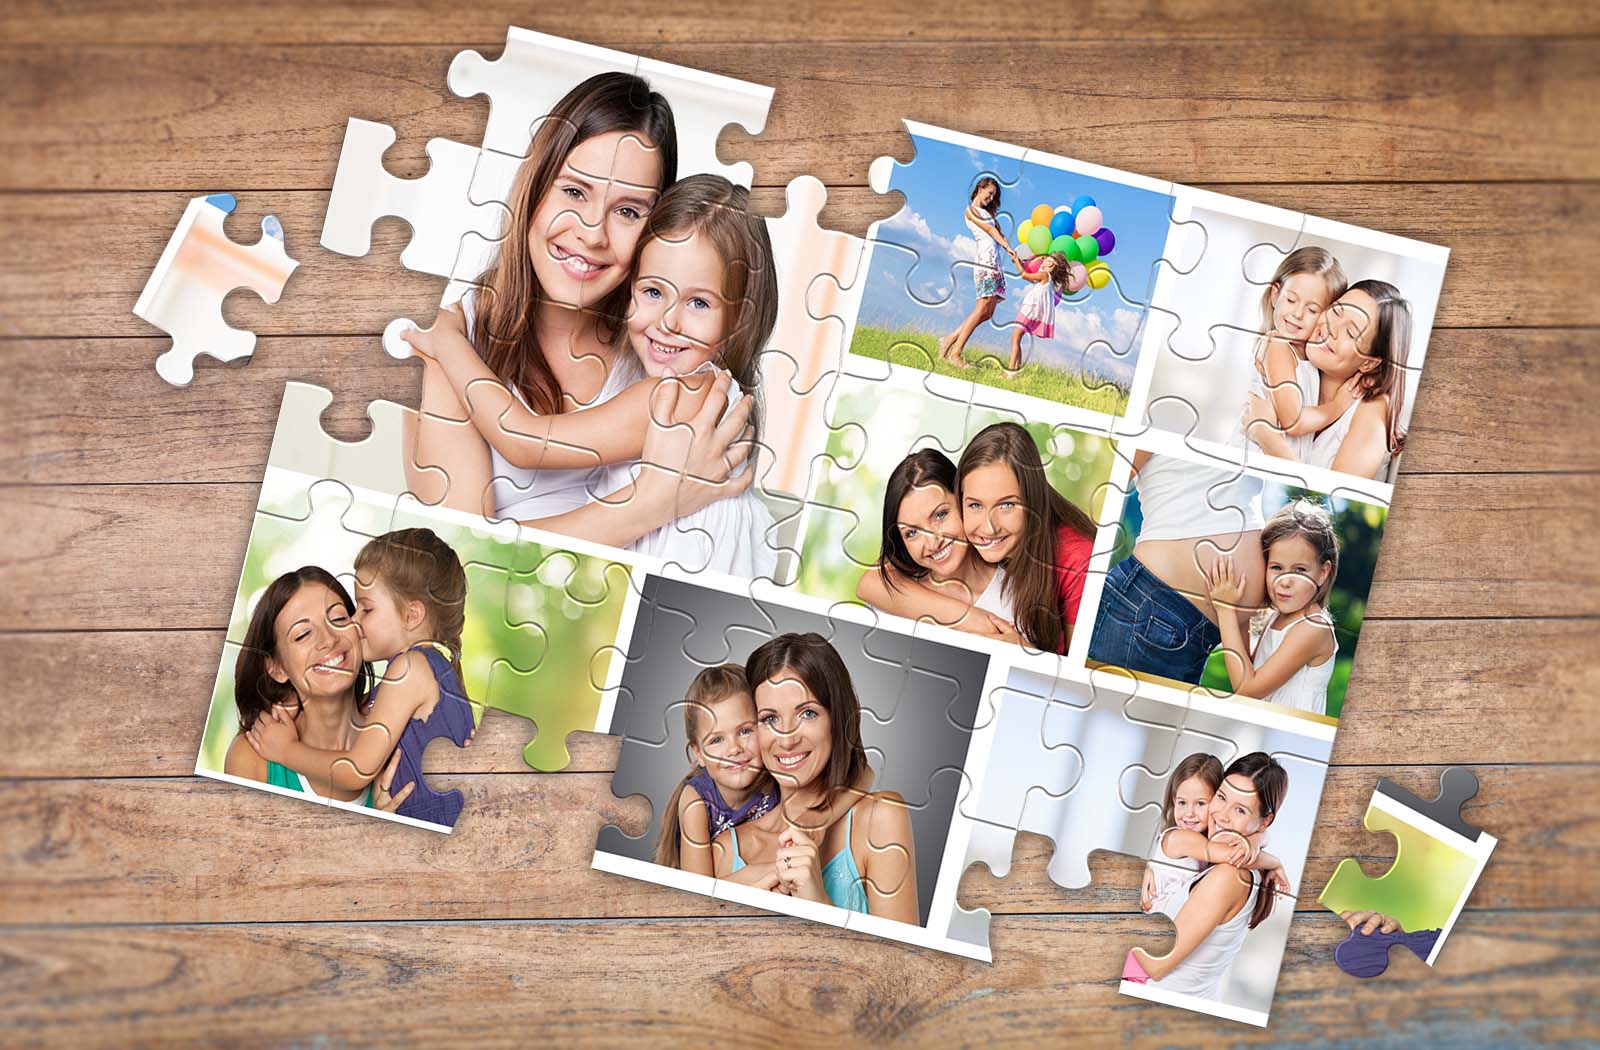 Gacha club - ePuzzle photo puzzle